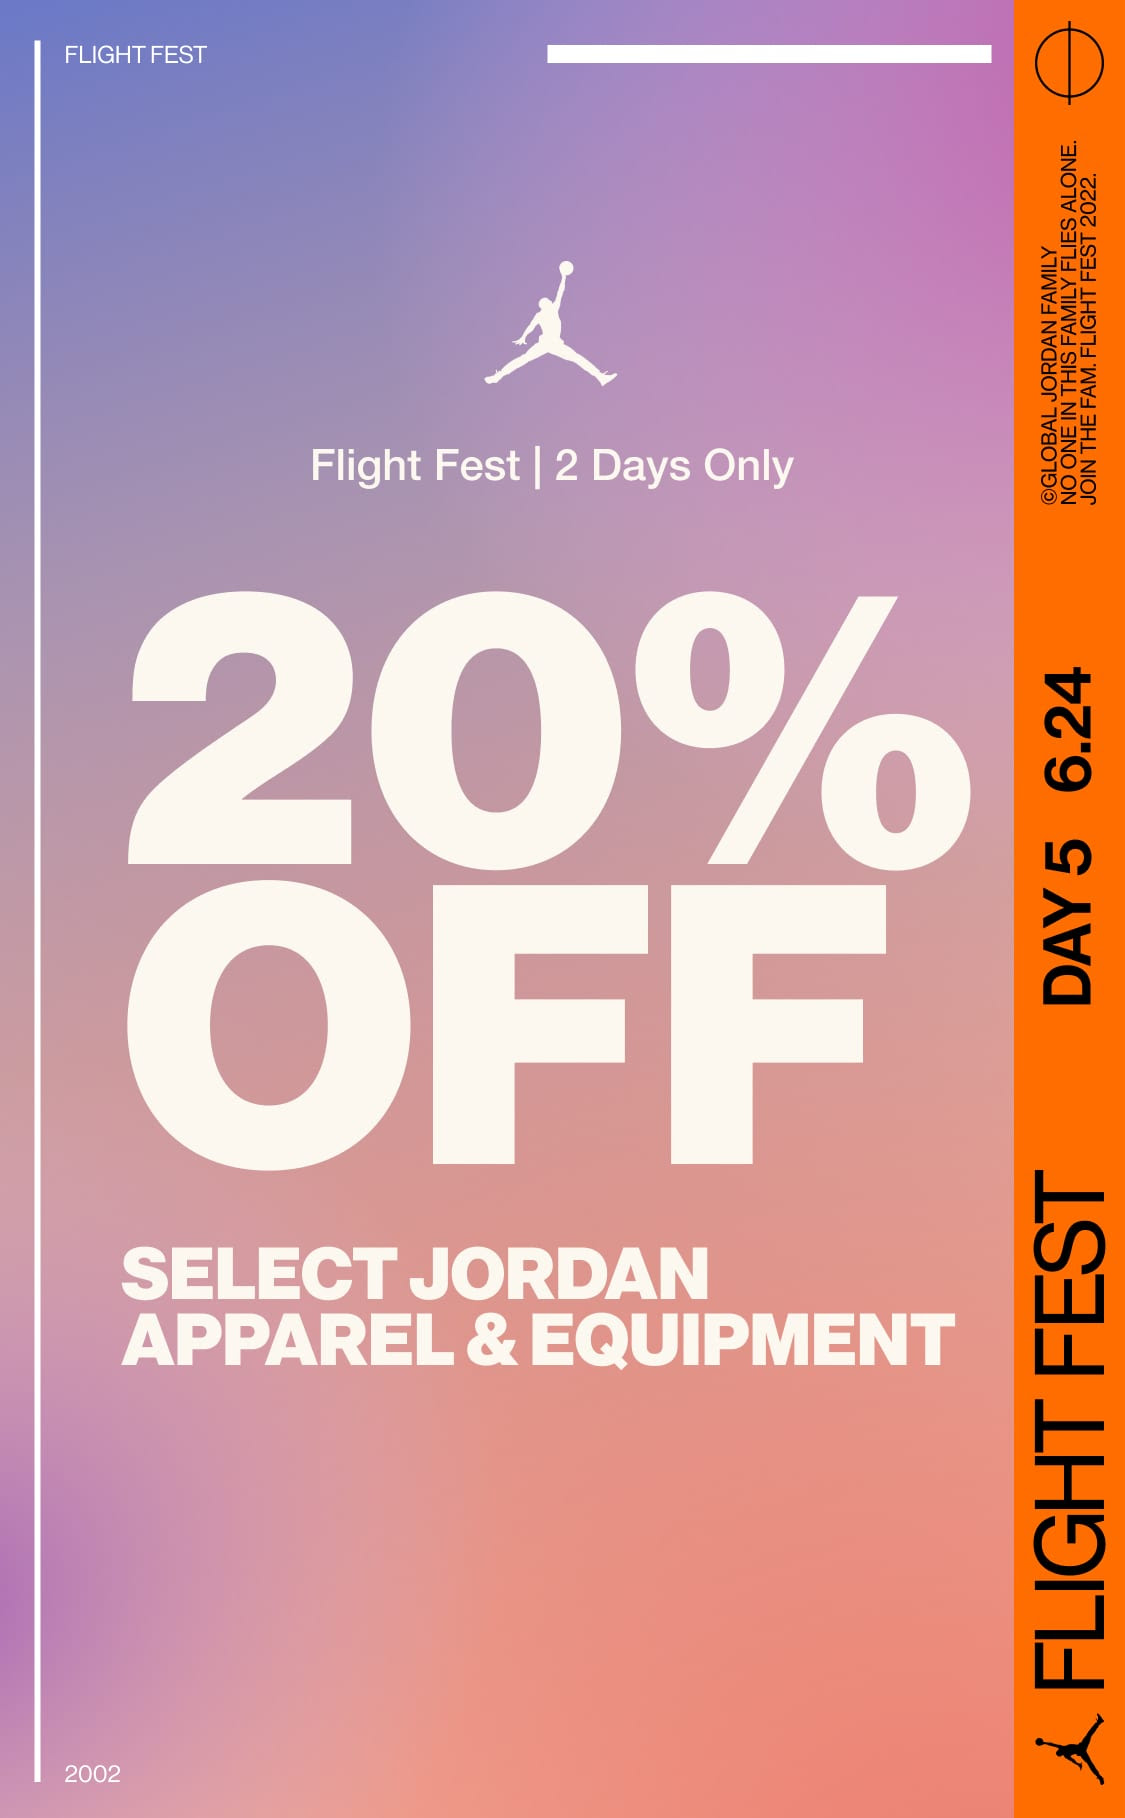 Jordan Flight Fest SALE up to 50% + extra 20% +FS $7.98